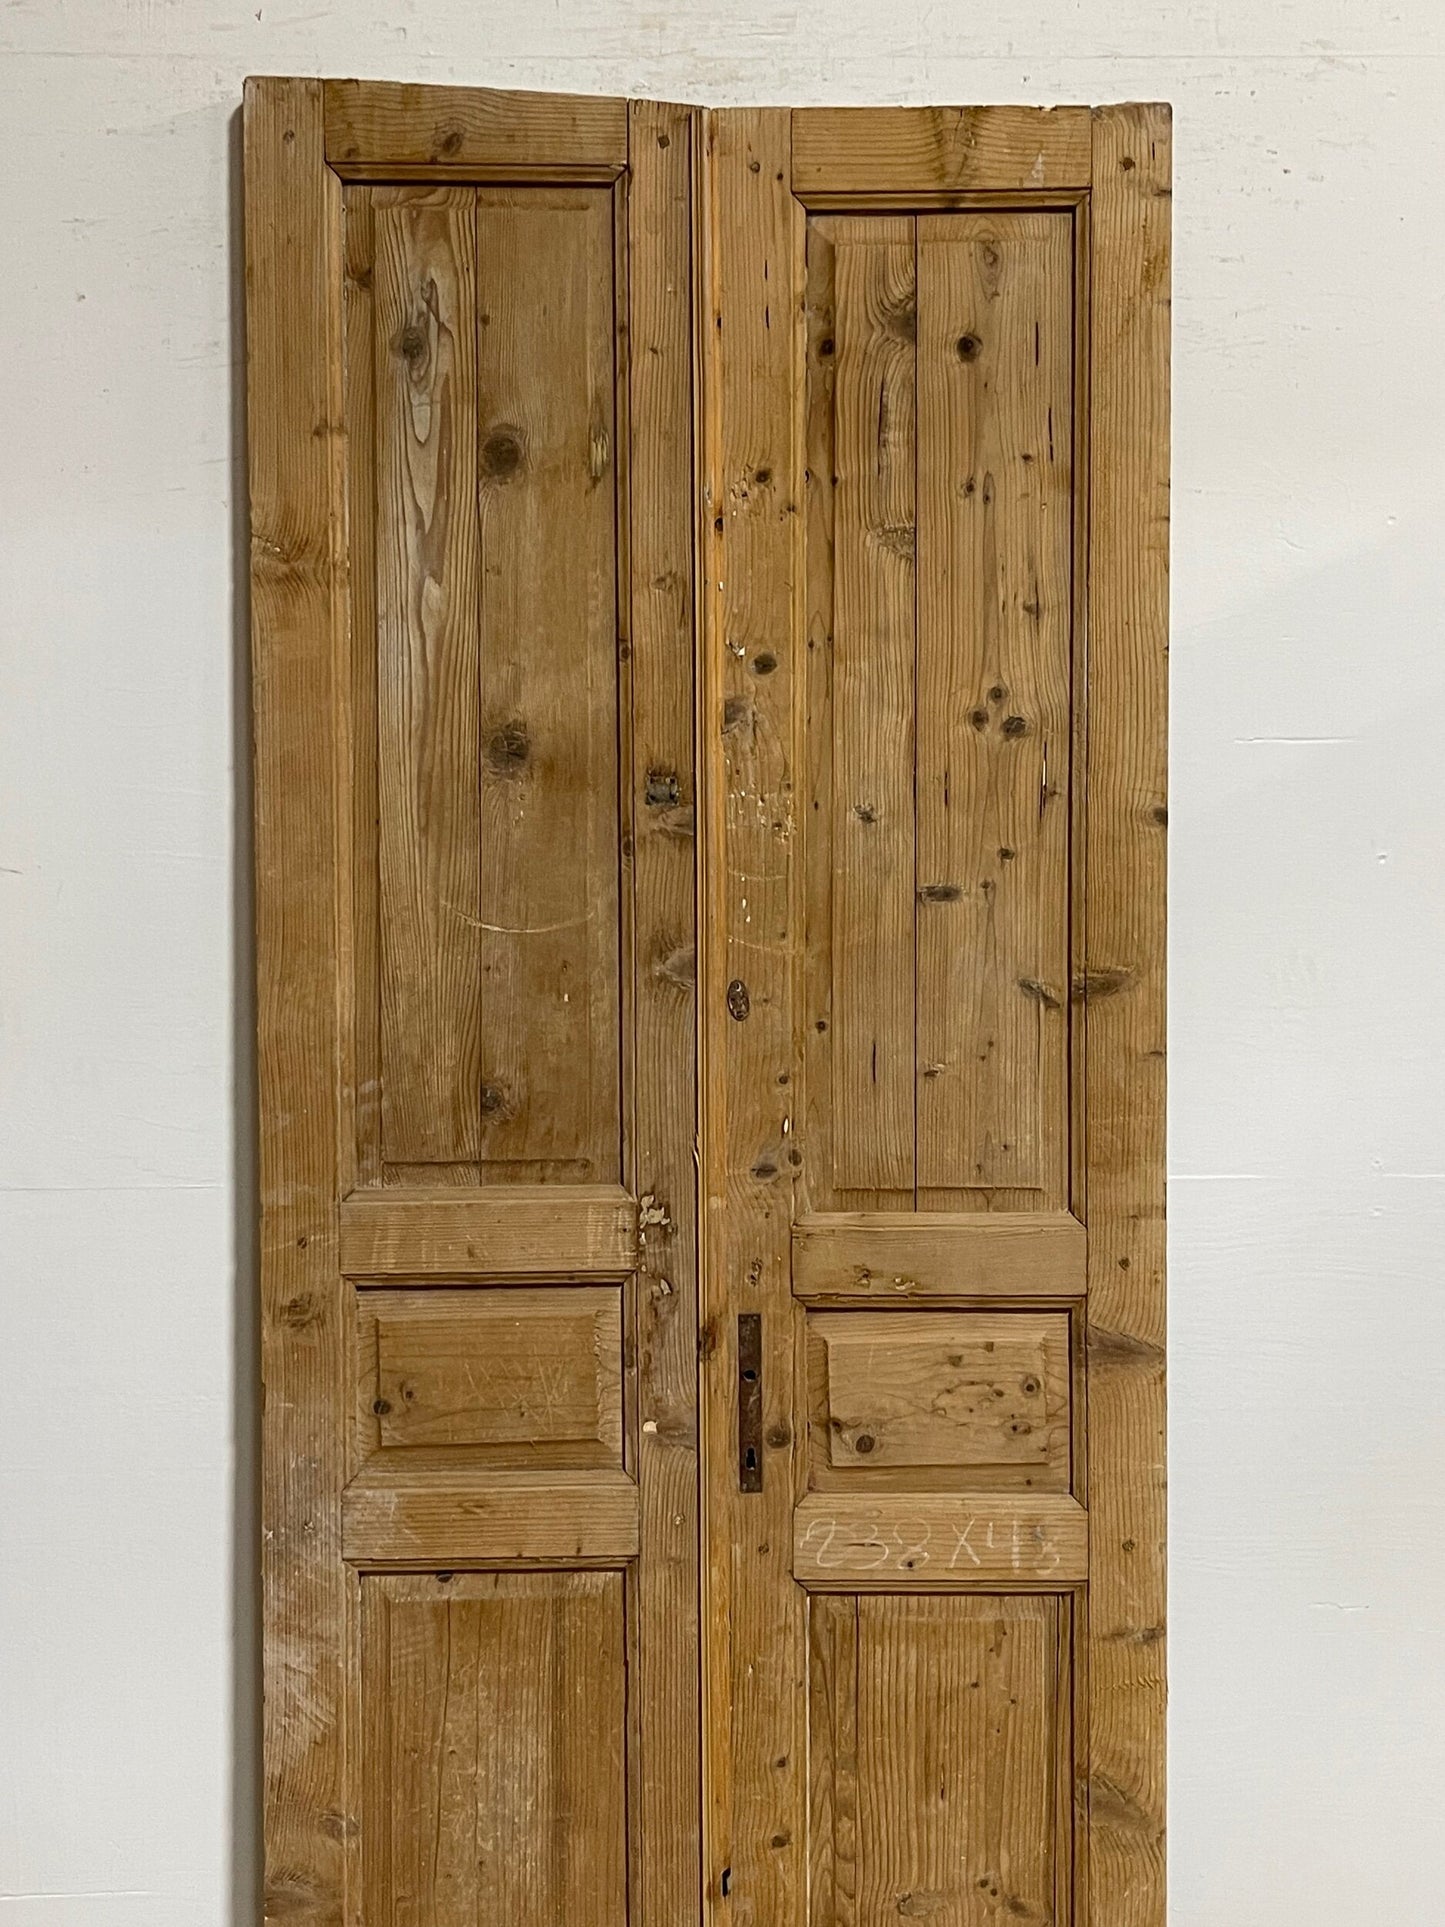 Antique French doors (93x38.25) H0166s